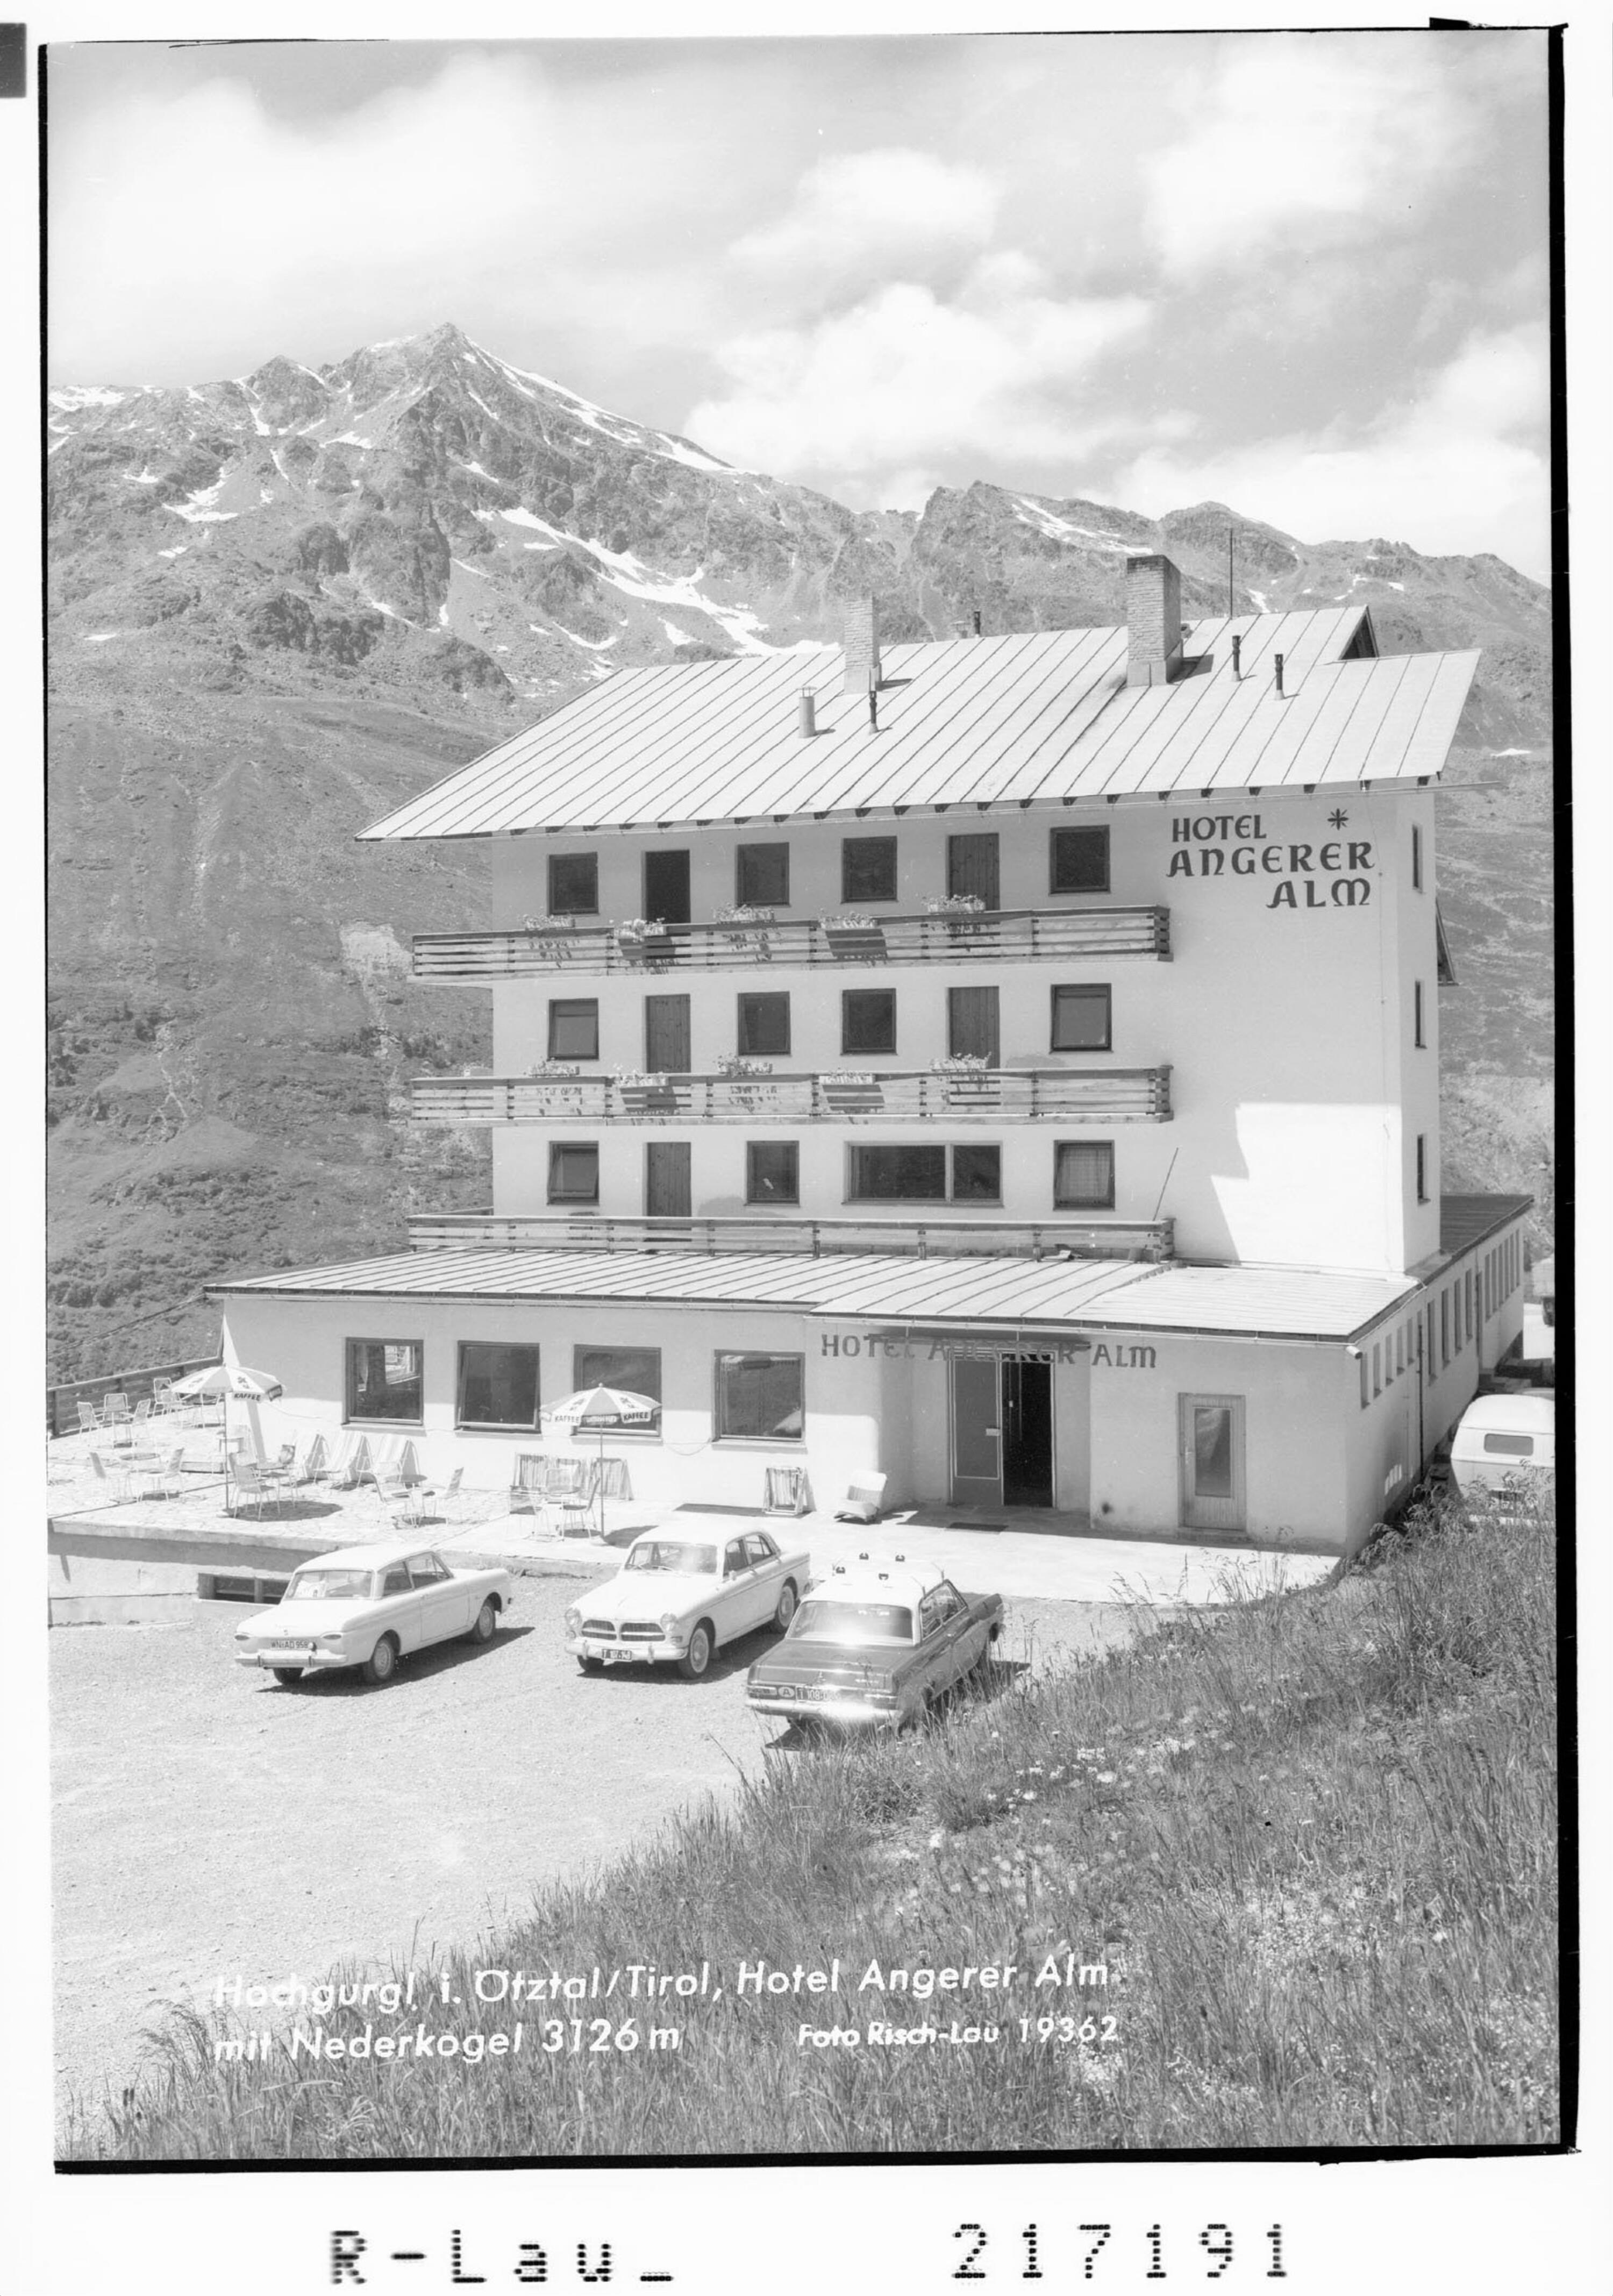 Hochgurgl im Ötztal / Tirol, Hotel Angerer Alm mit Nederkogel></div>


    <hr>
    <div class=